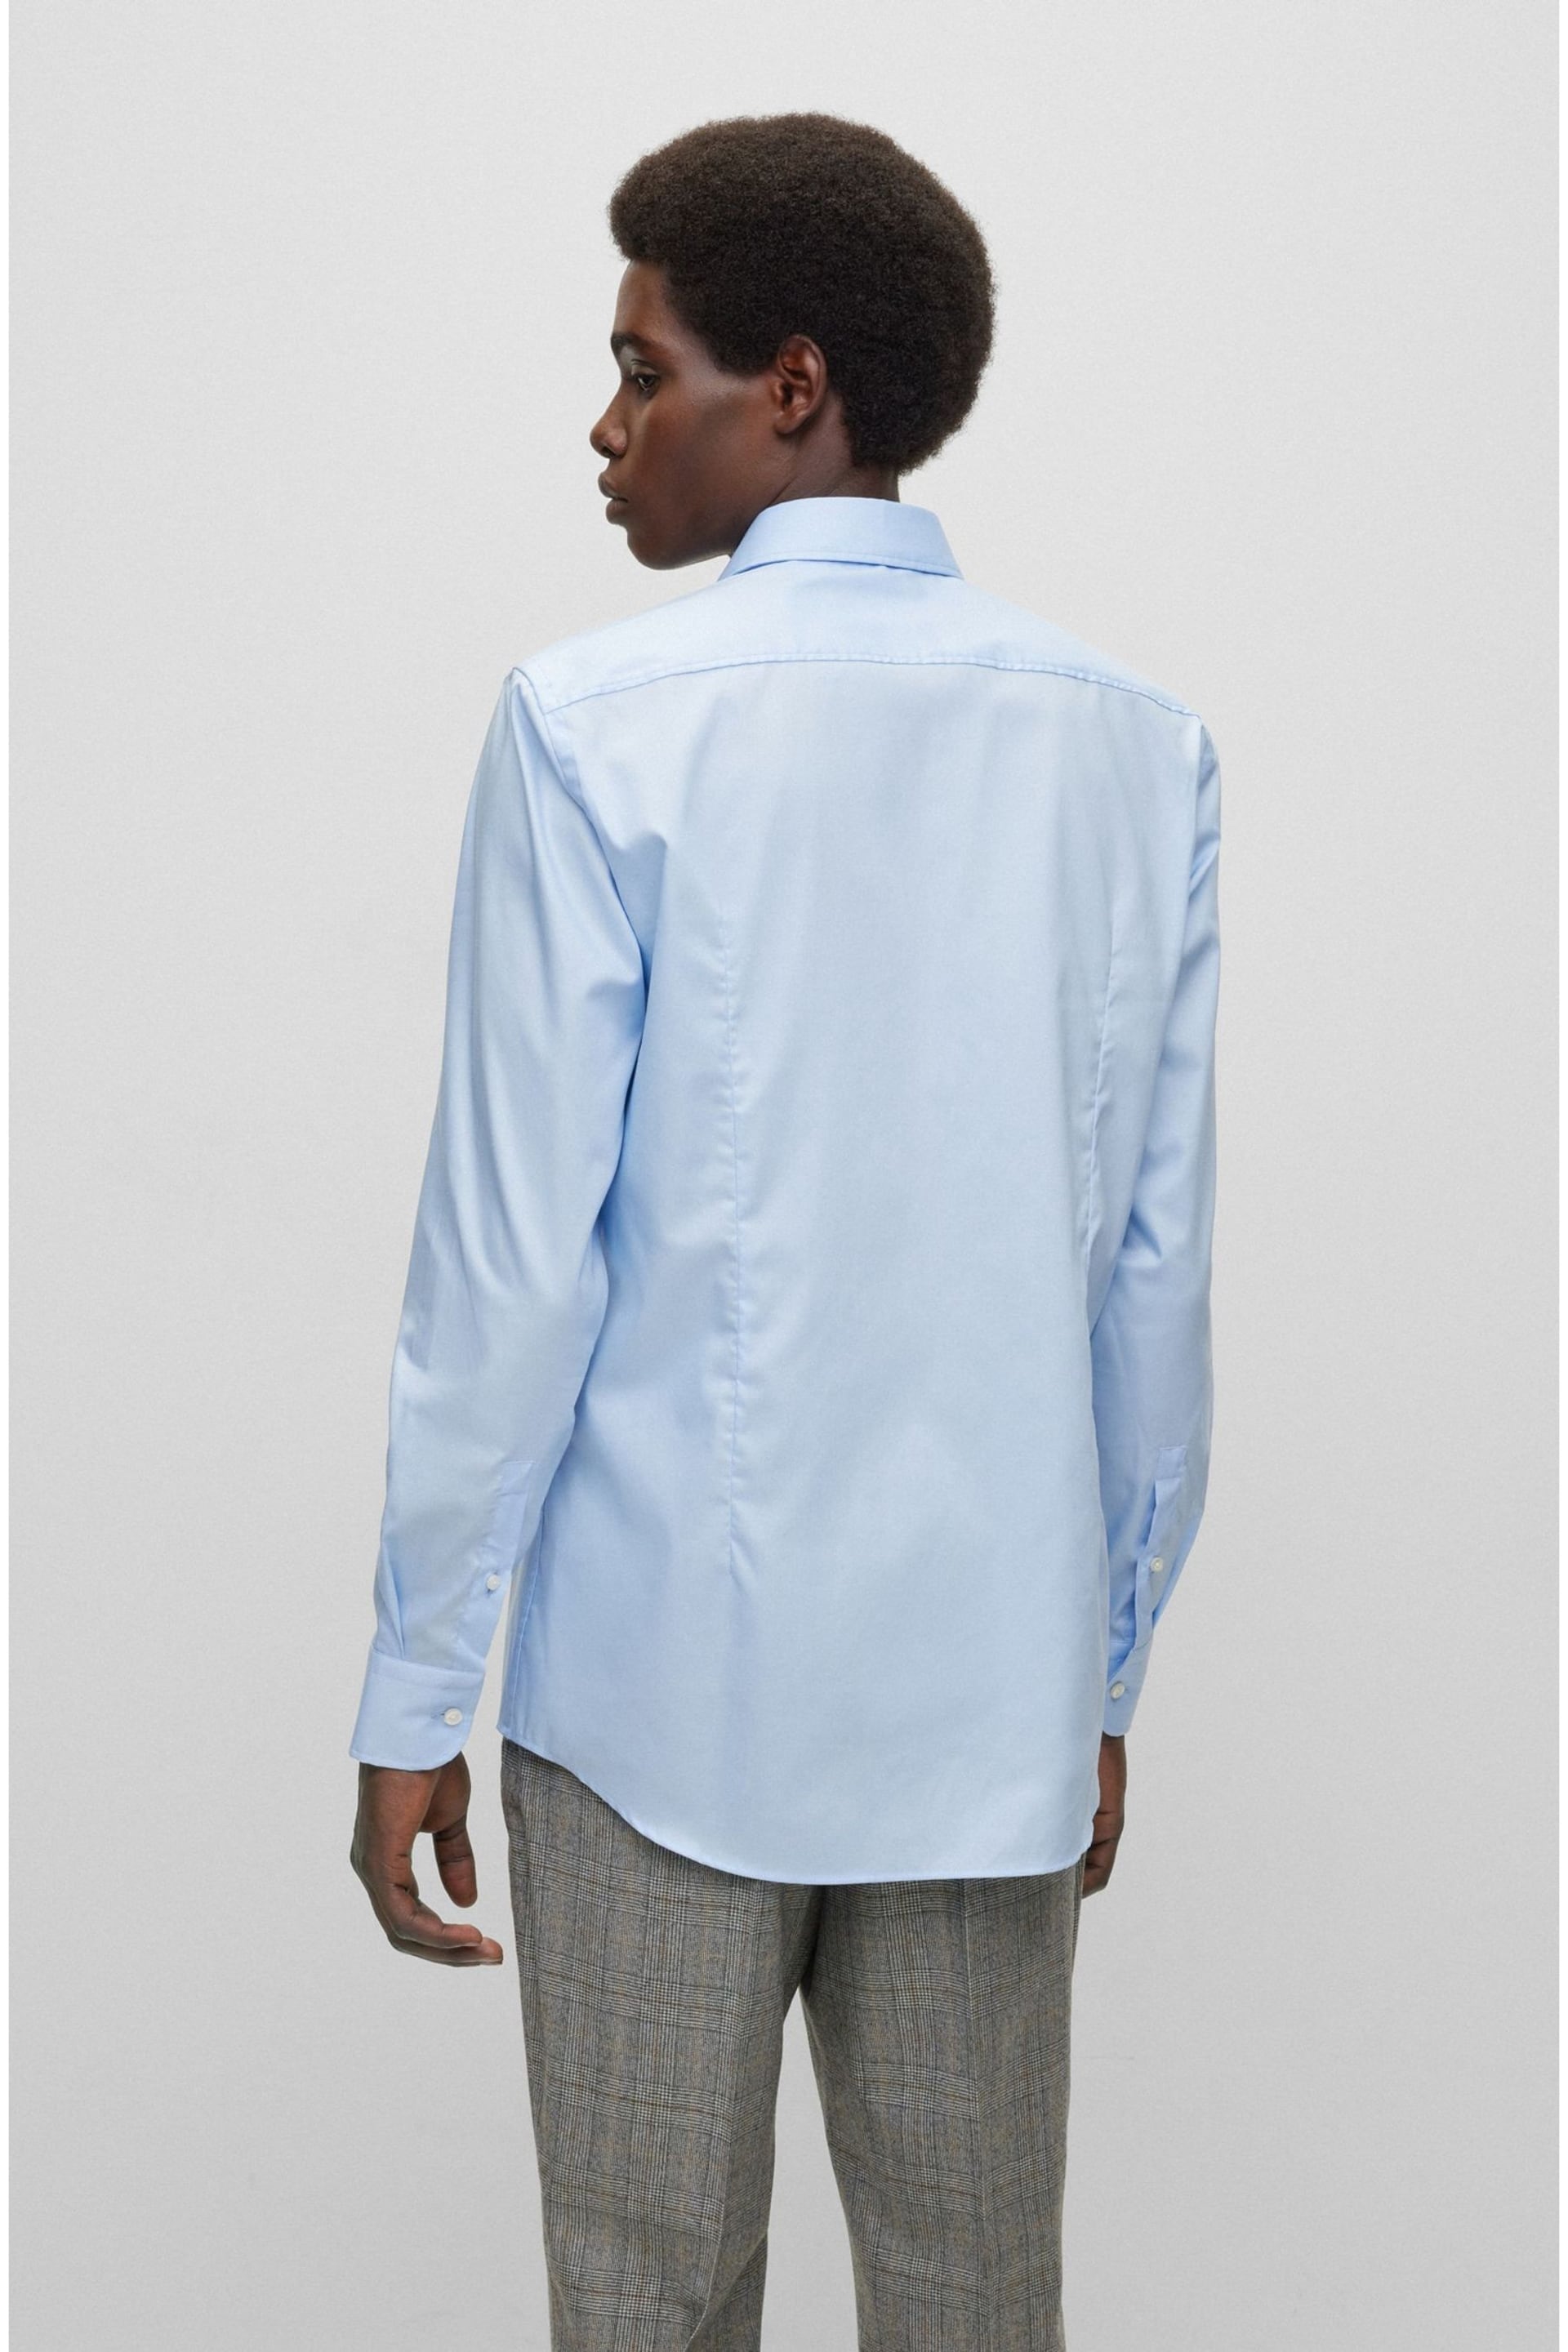 BOSS Blue Slim Fit Dress Shirt - Image 2 of 6